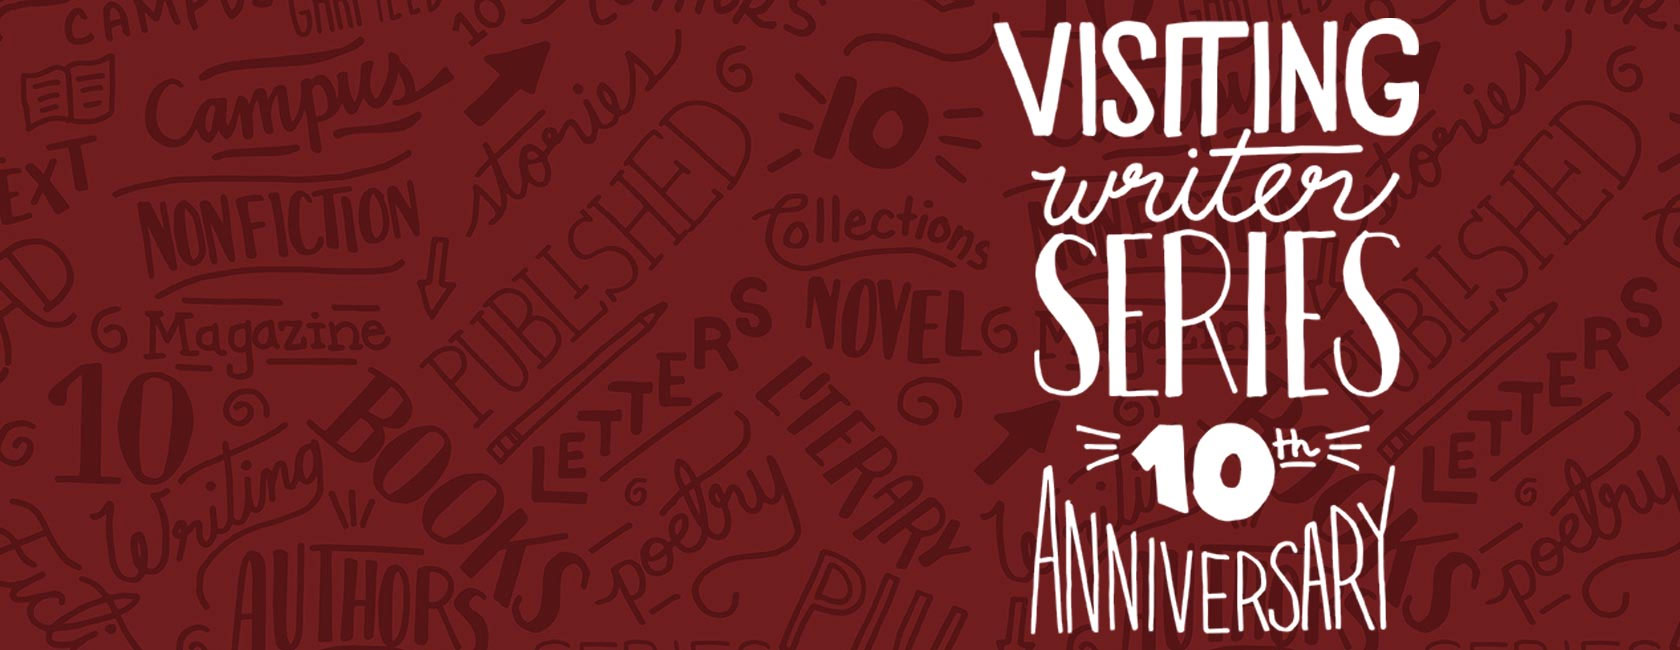 Visiting Writer Series 10th Anniversary banner